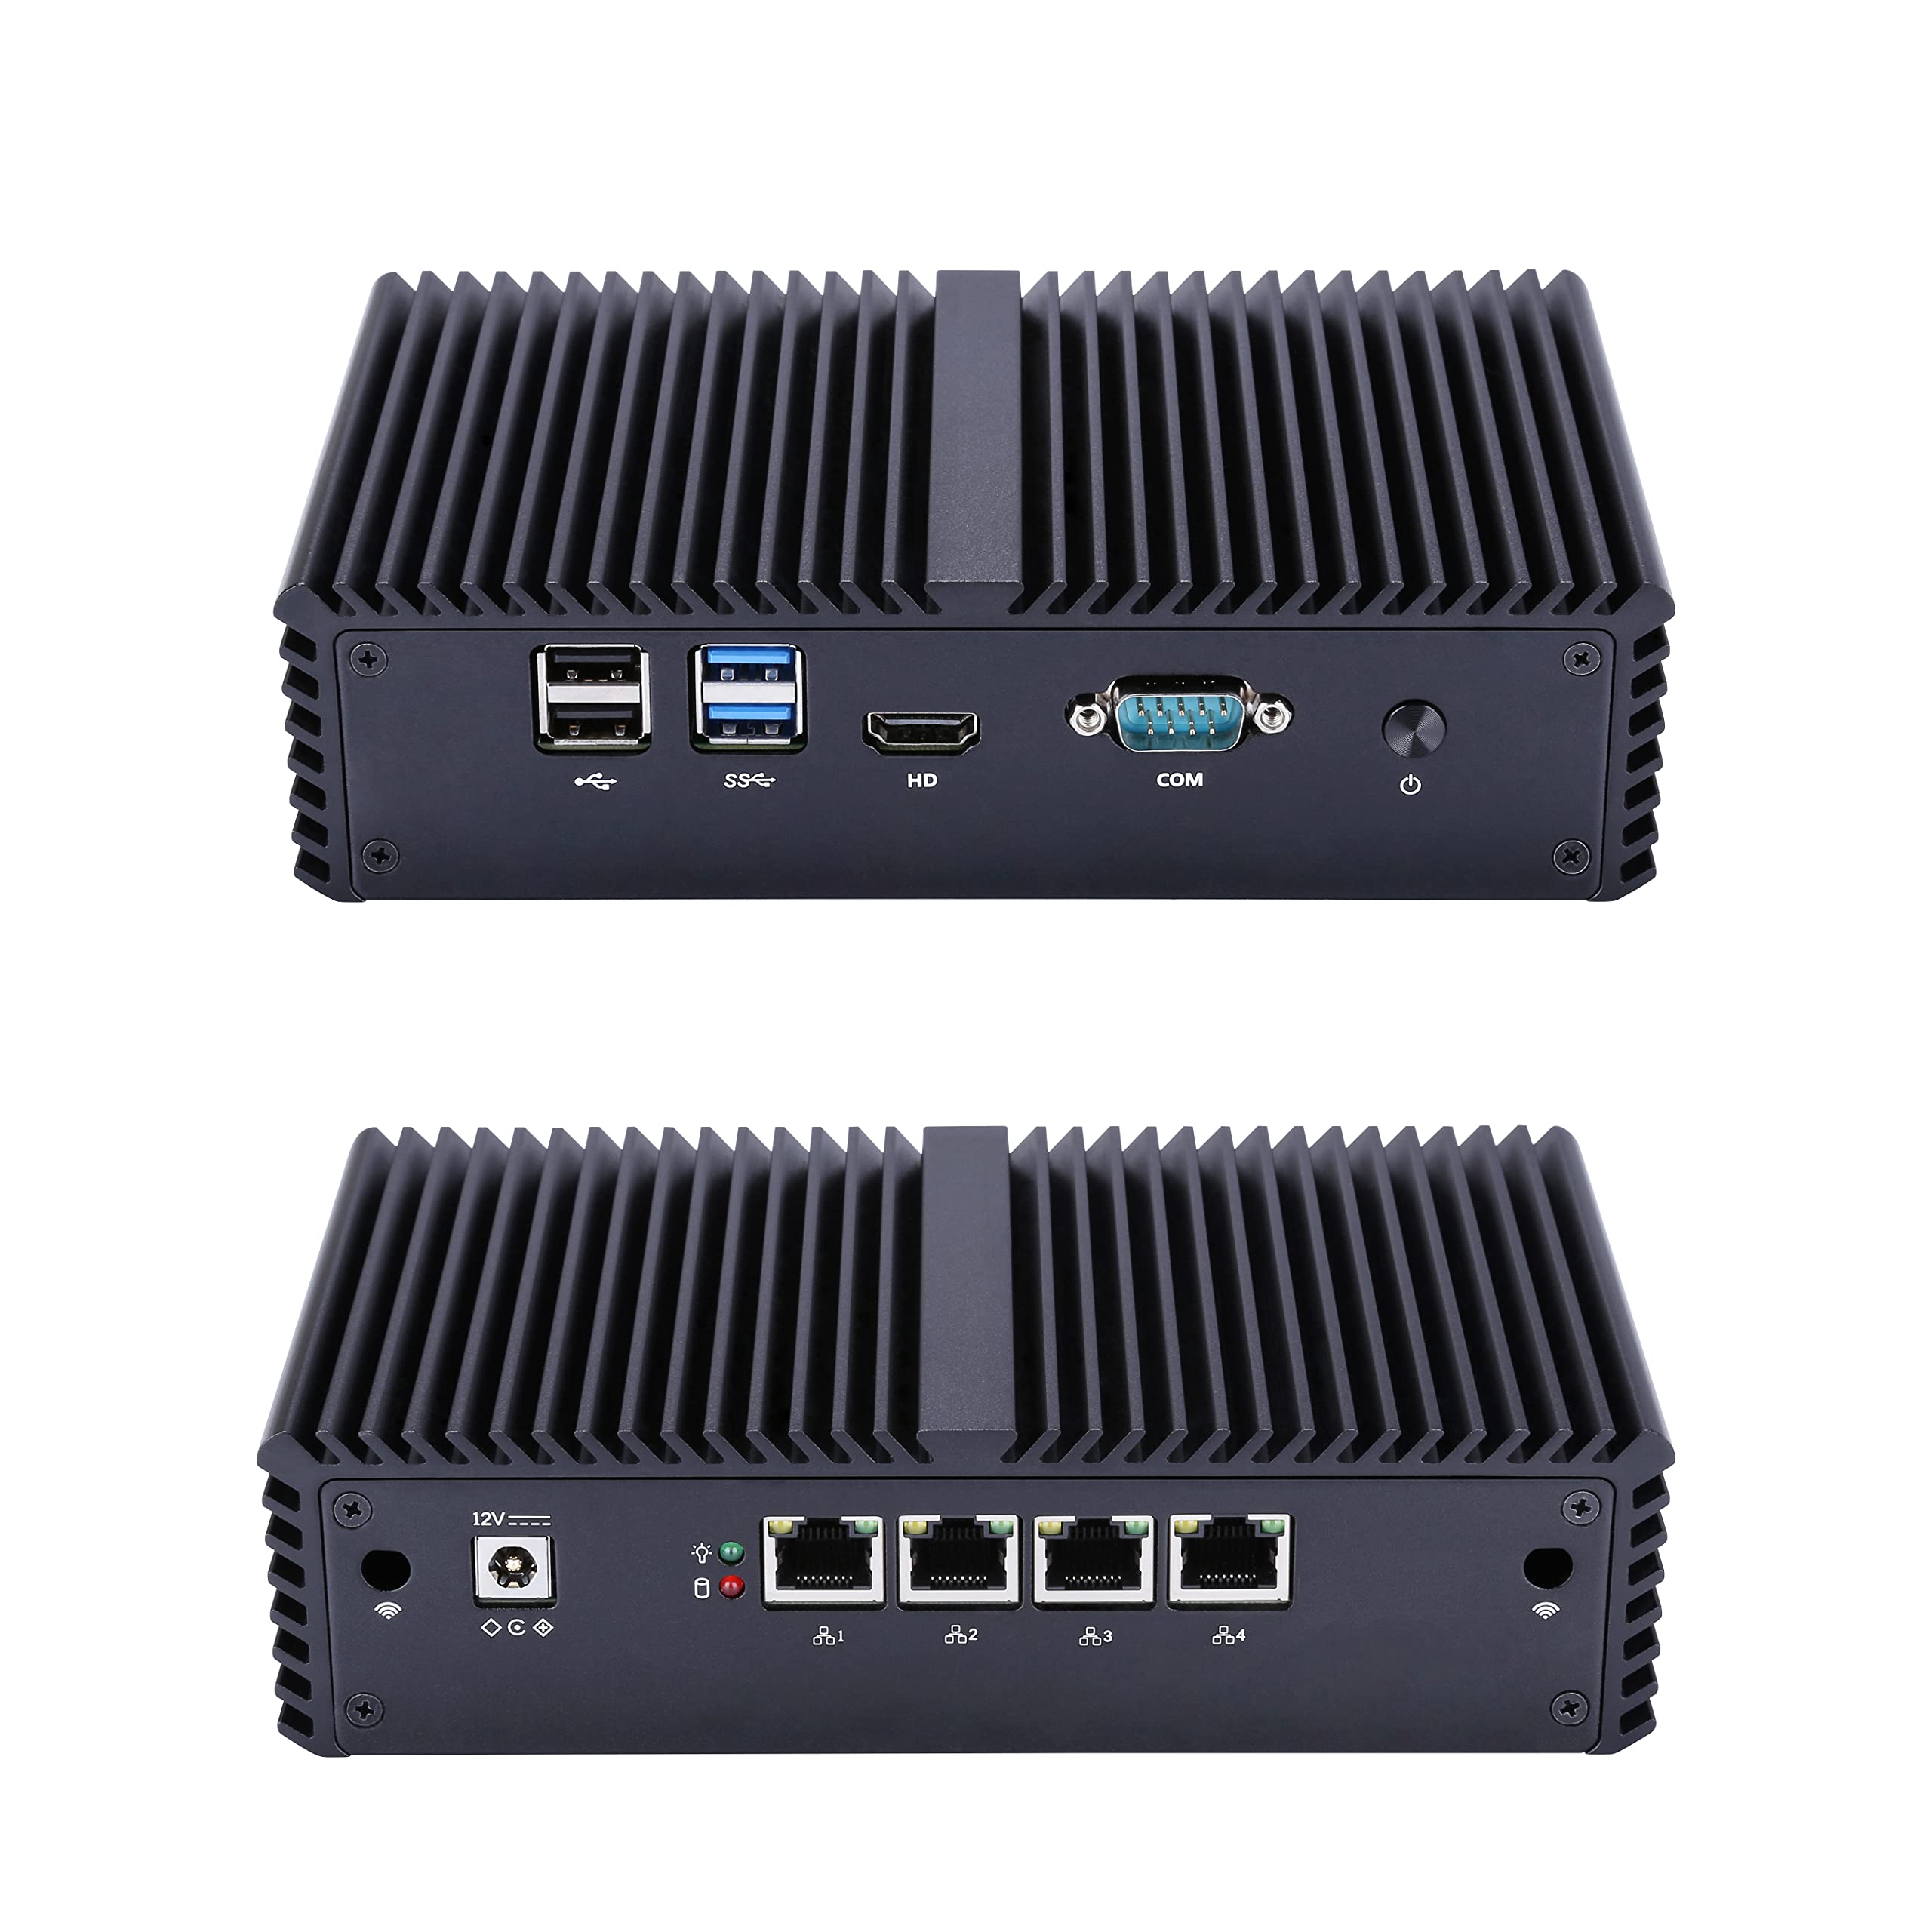 Barebone 4 LAN J1900 Router Qotom-Q190G4N-S07,Intel Celeron Processor J1900,VGA,4*USB, Apply to Router, Firewall, Proxy, Linux Mini PC OPNsense